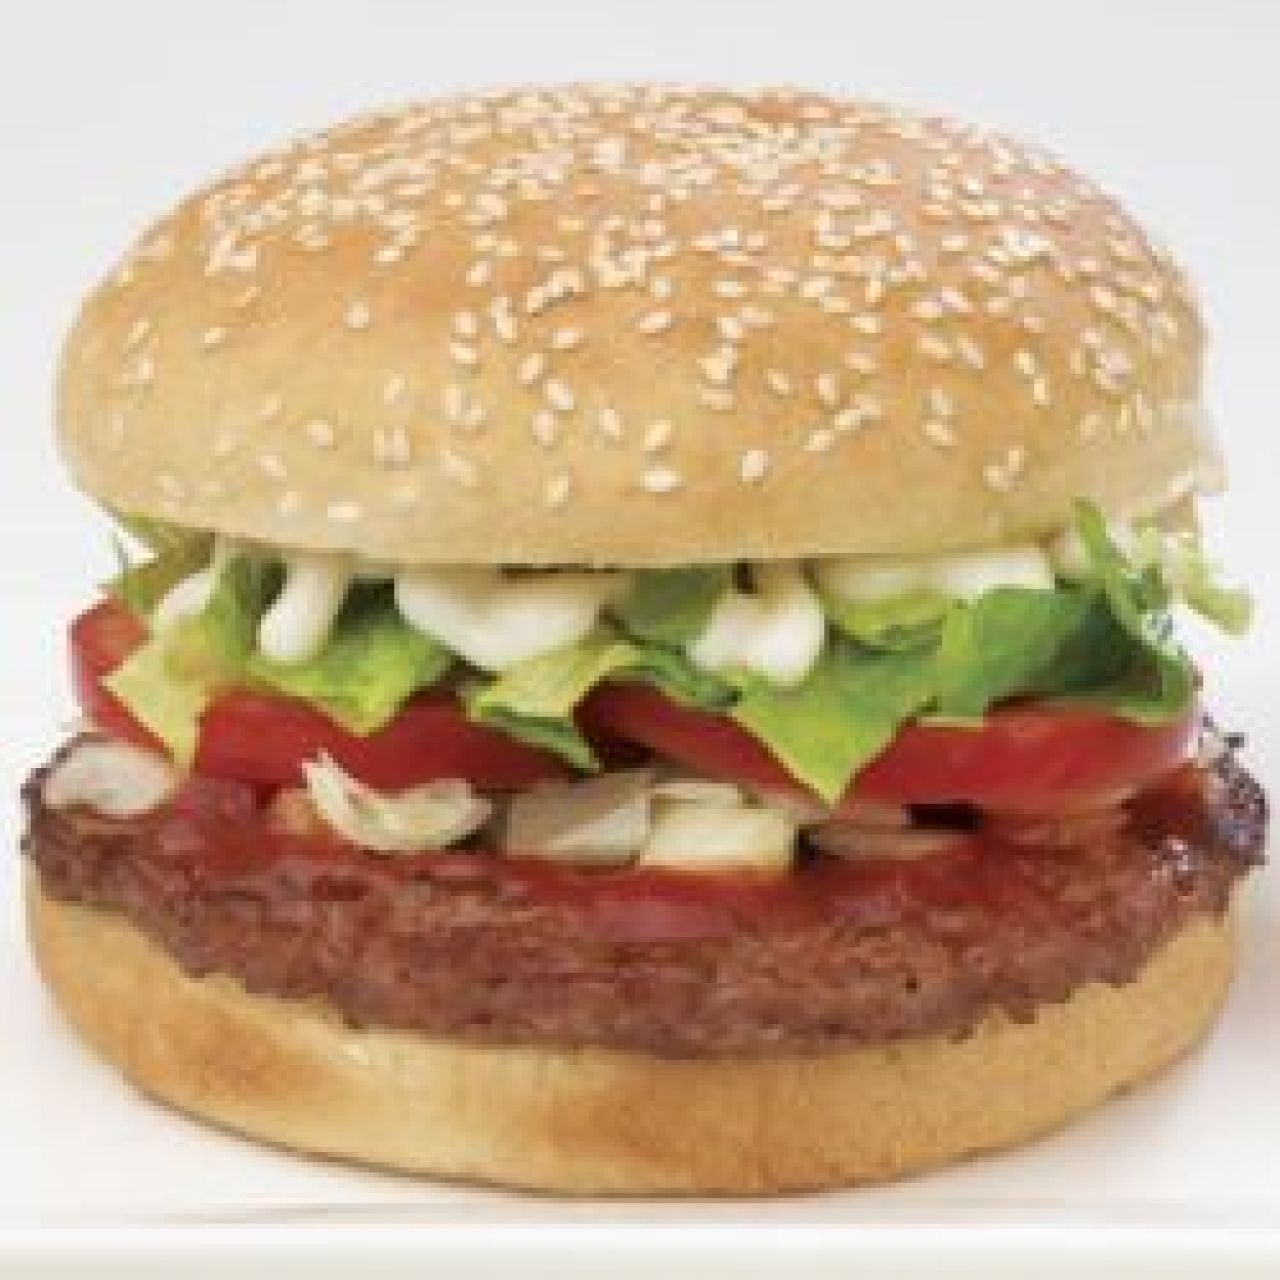 Zdrowy hamburger?